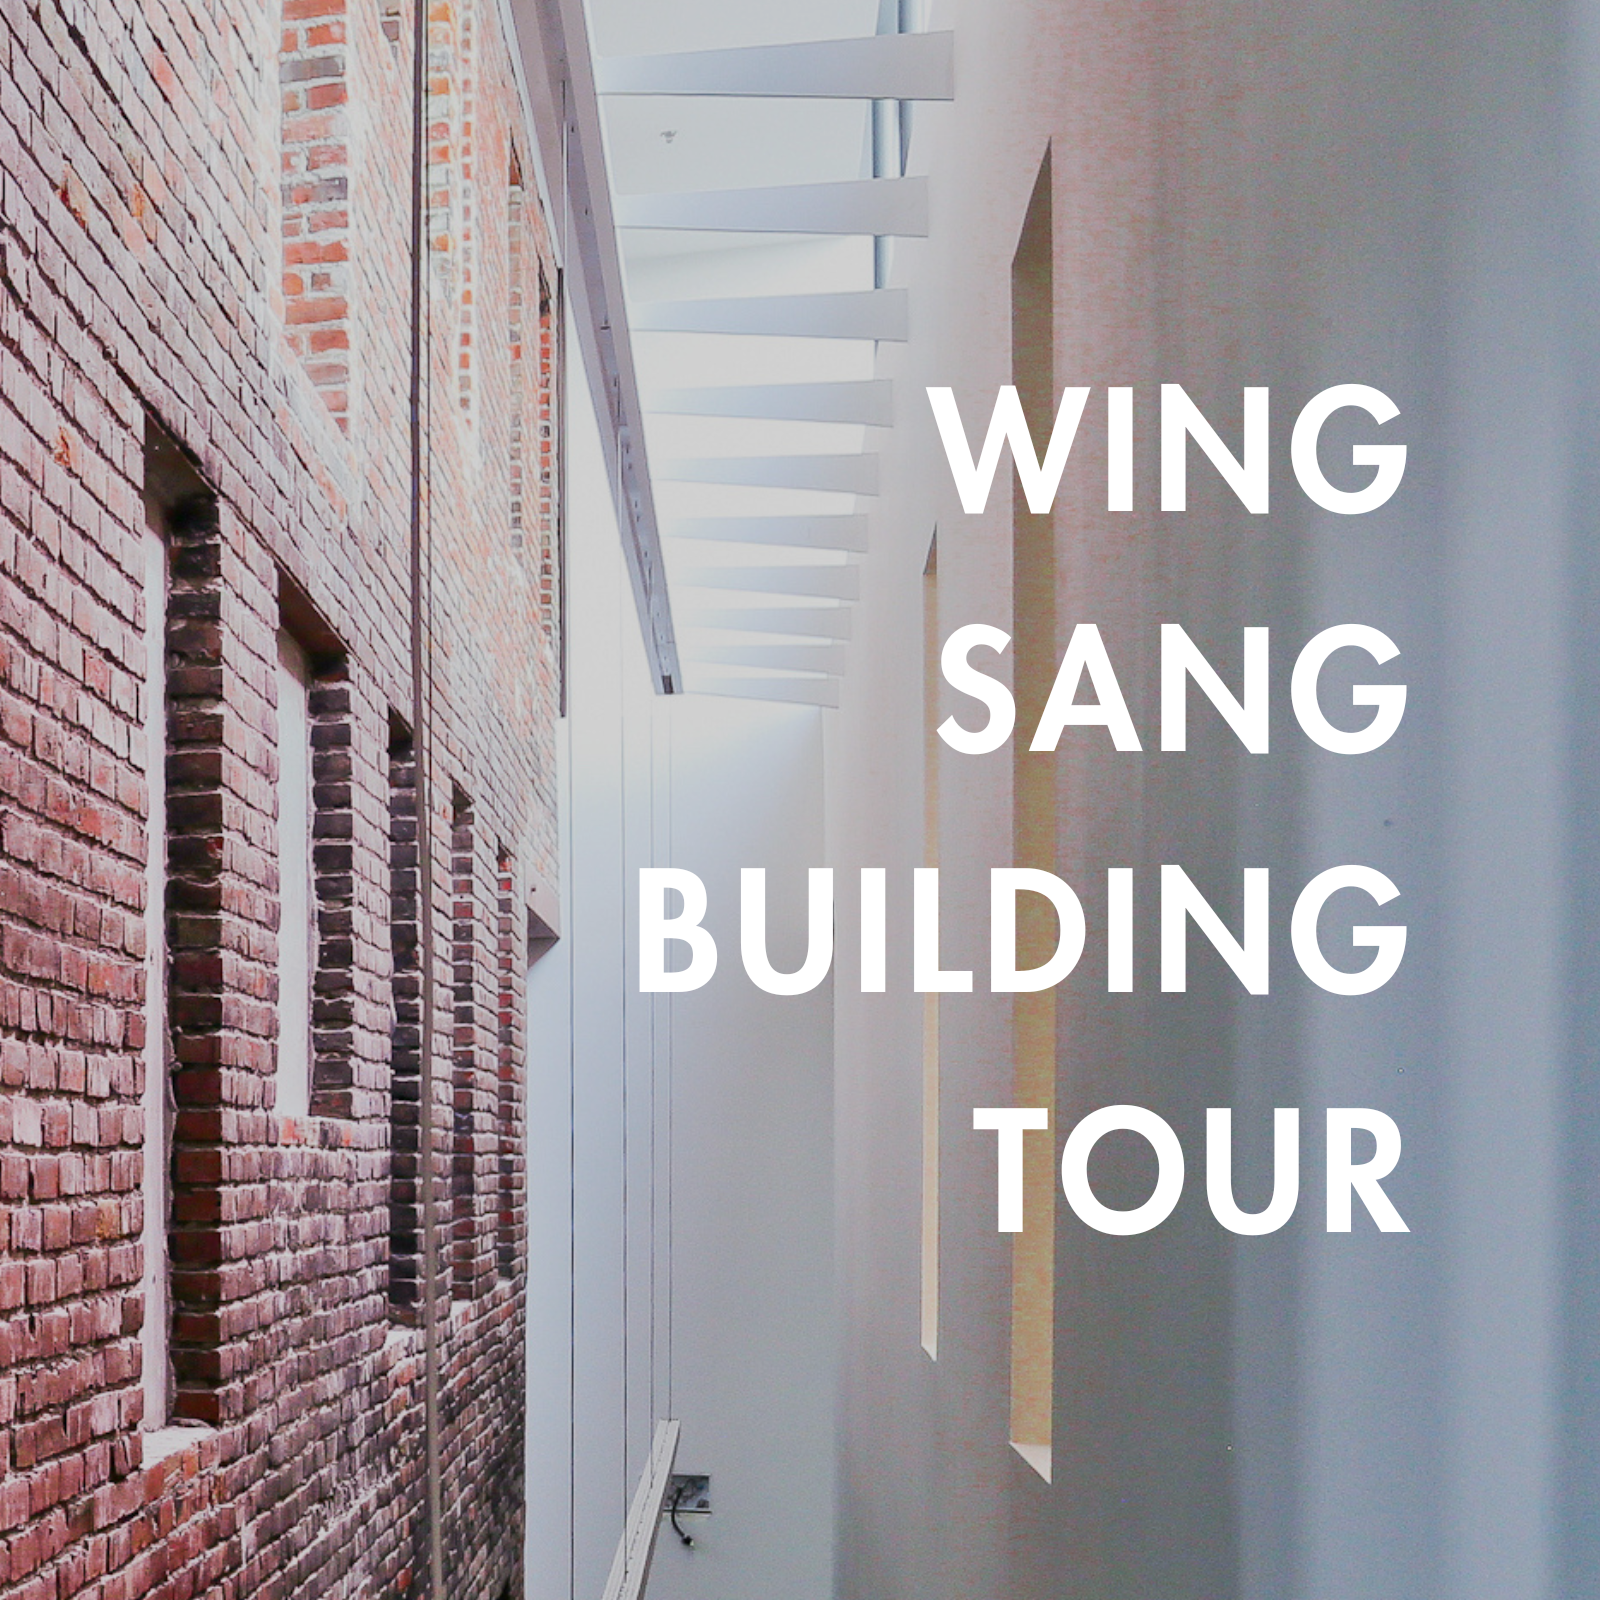 Wing Sang Building Tour Image